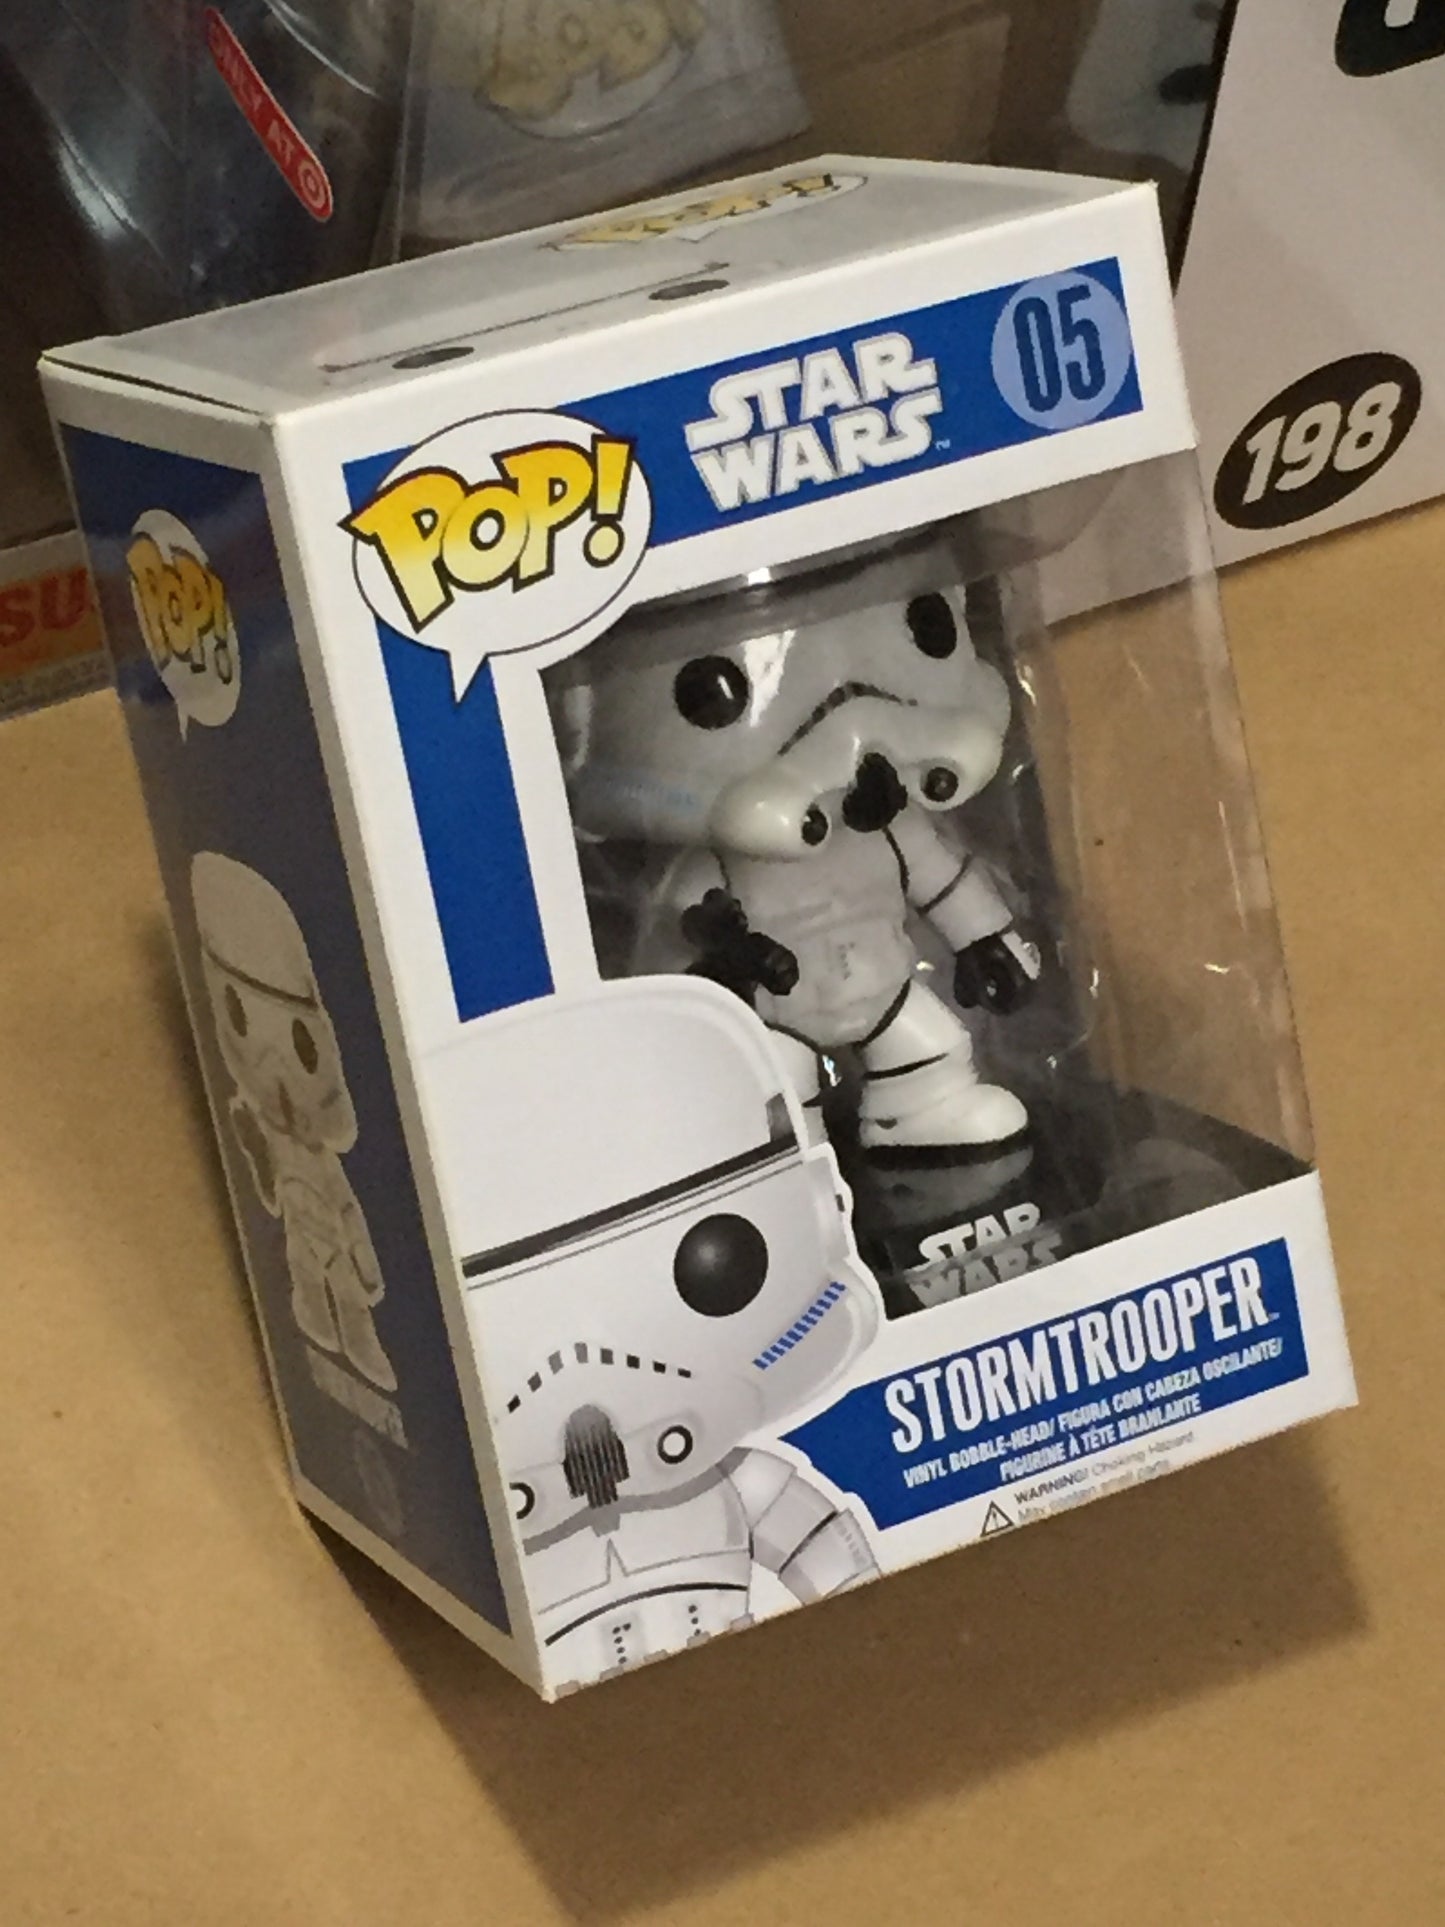 Star Wars Blue box stormtrooper Funko Pop! Vinyl figure